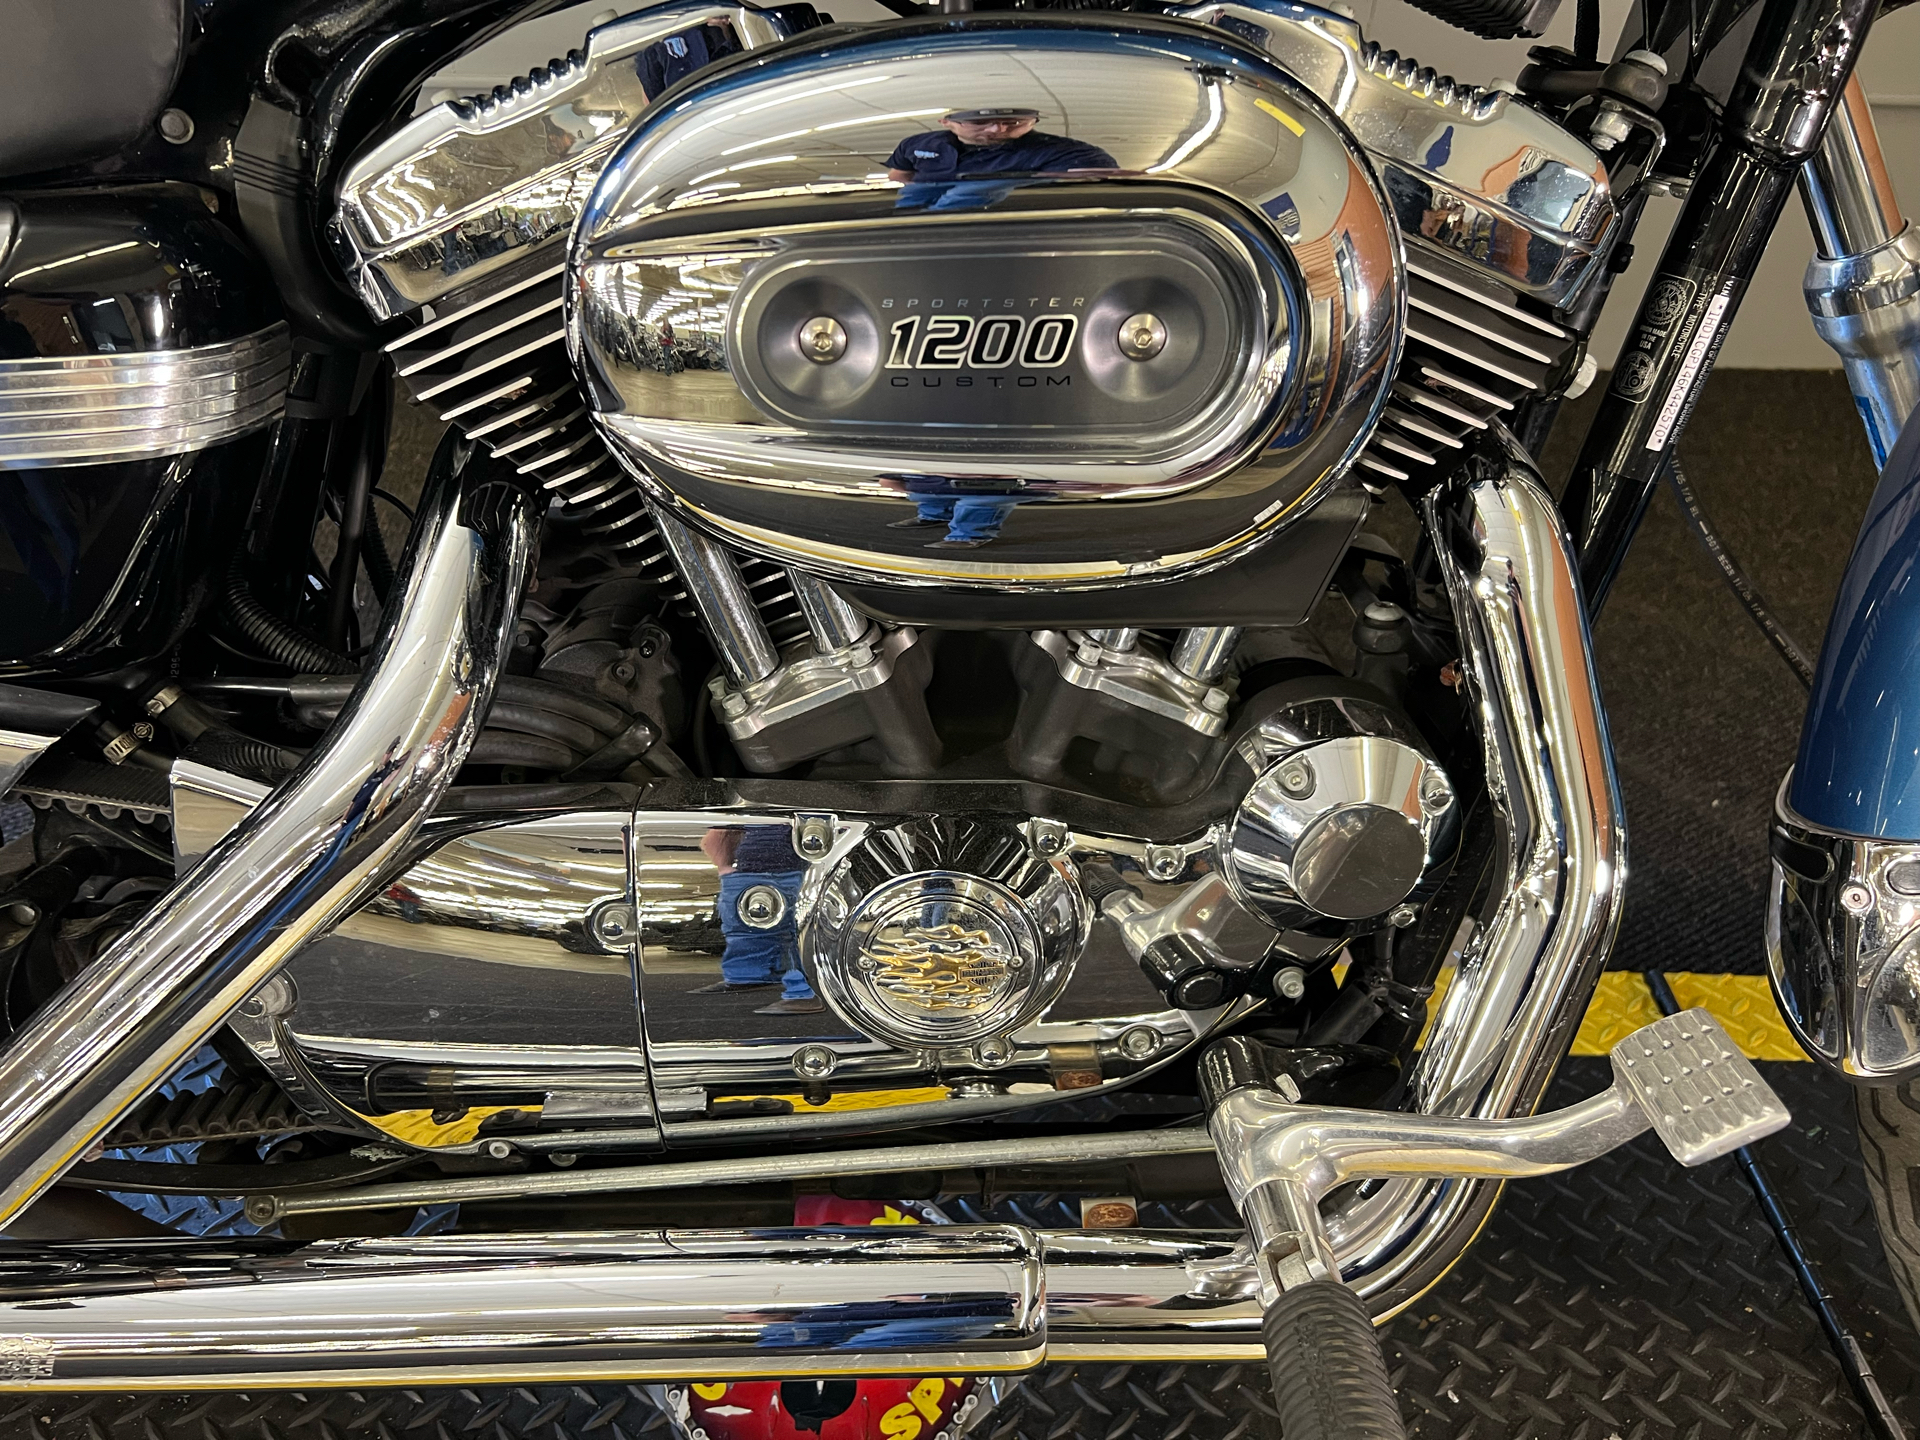 2006 Harley-Davidson Sportster® 1200 Custom in Tyrone, Pennsylvania - Photo 3